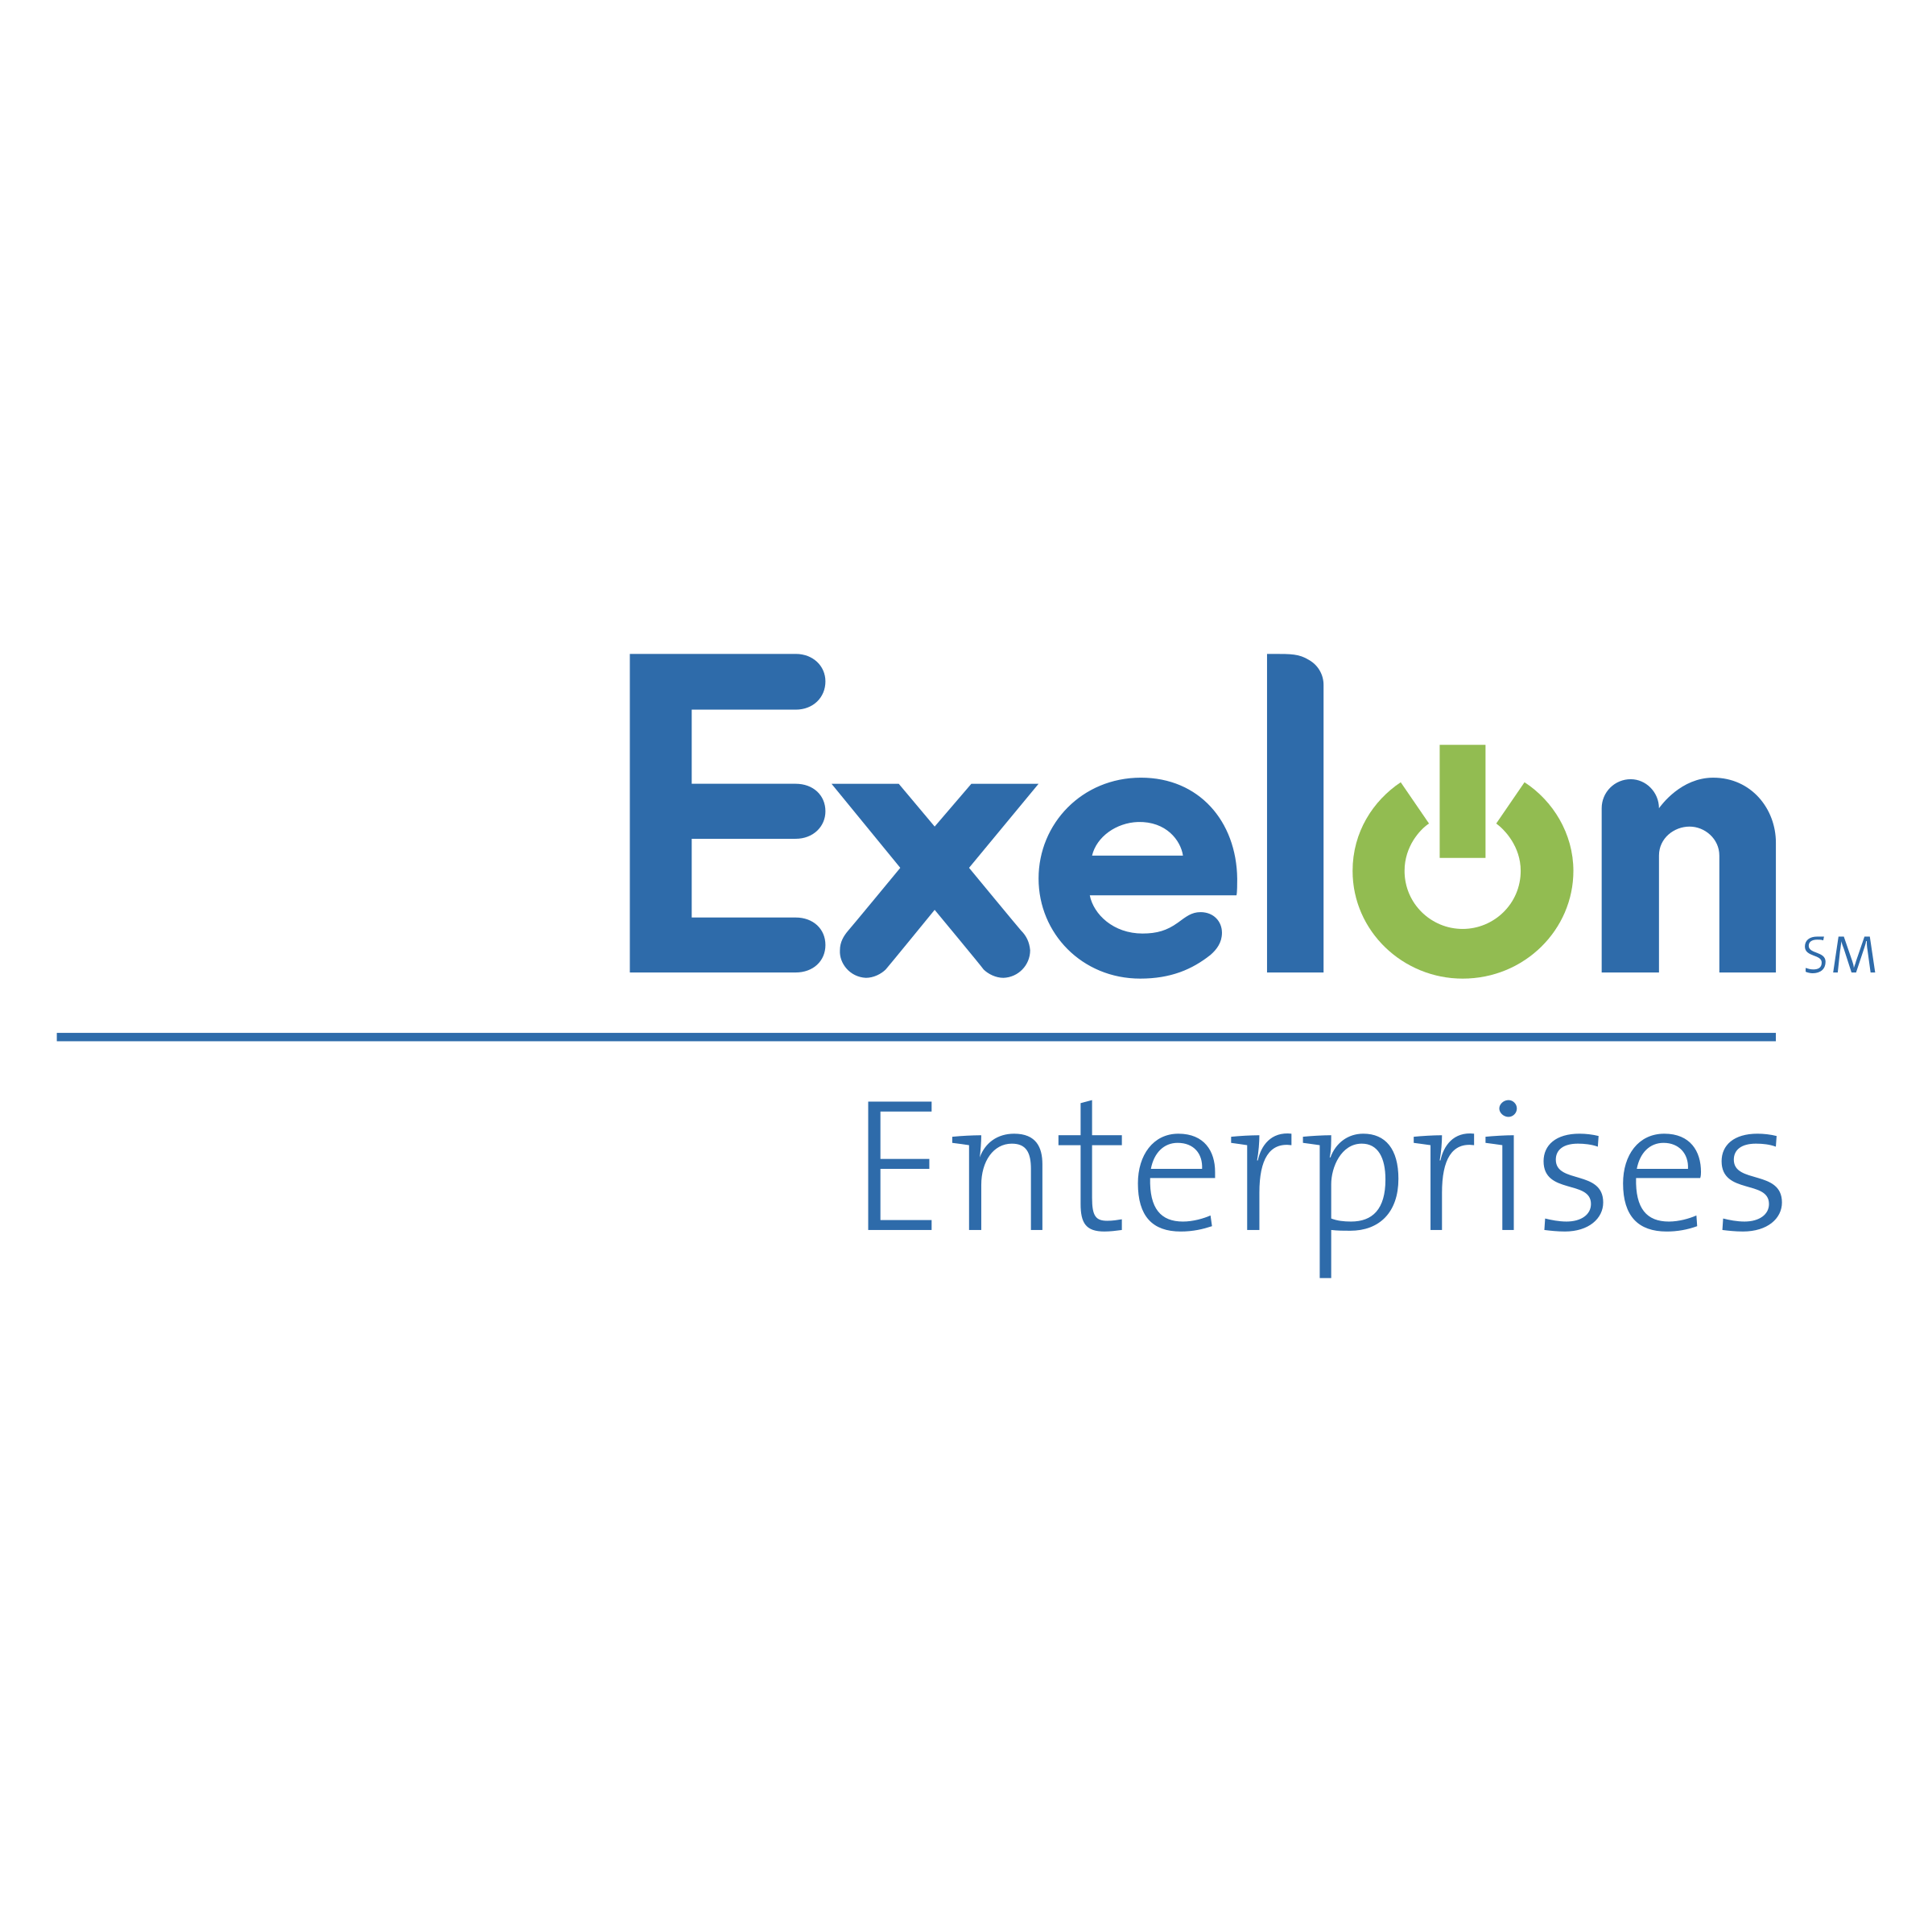 Exelon Logo - Exelon Logo PNG Transparent & SVG Vector - Freebie Supply